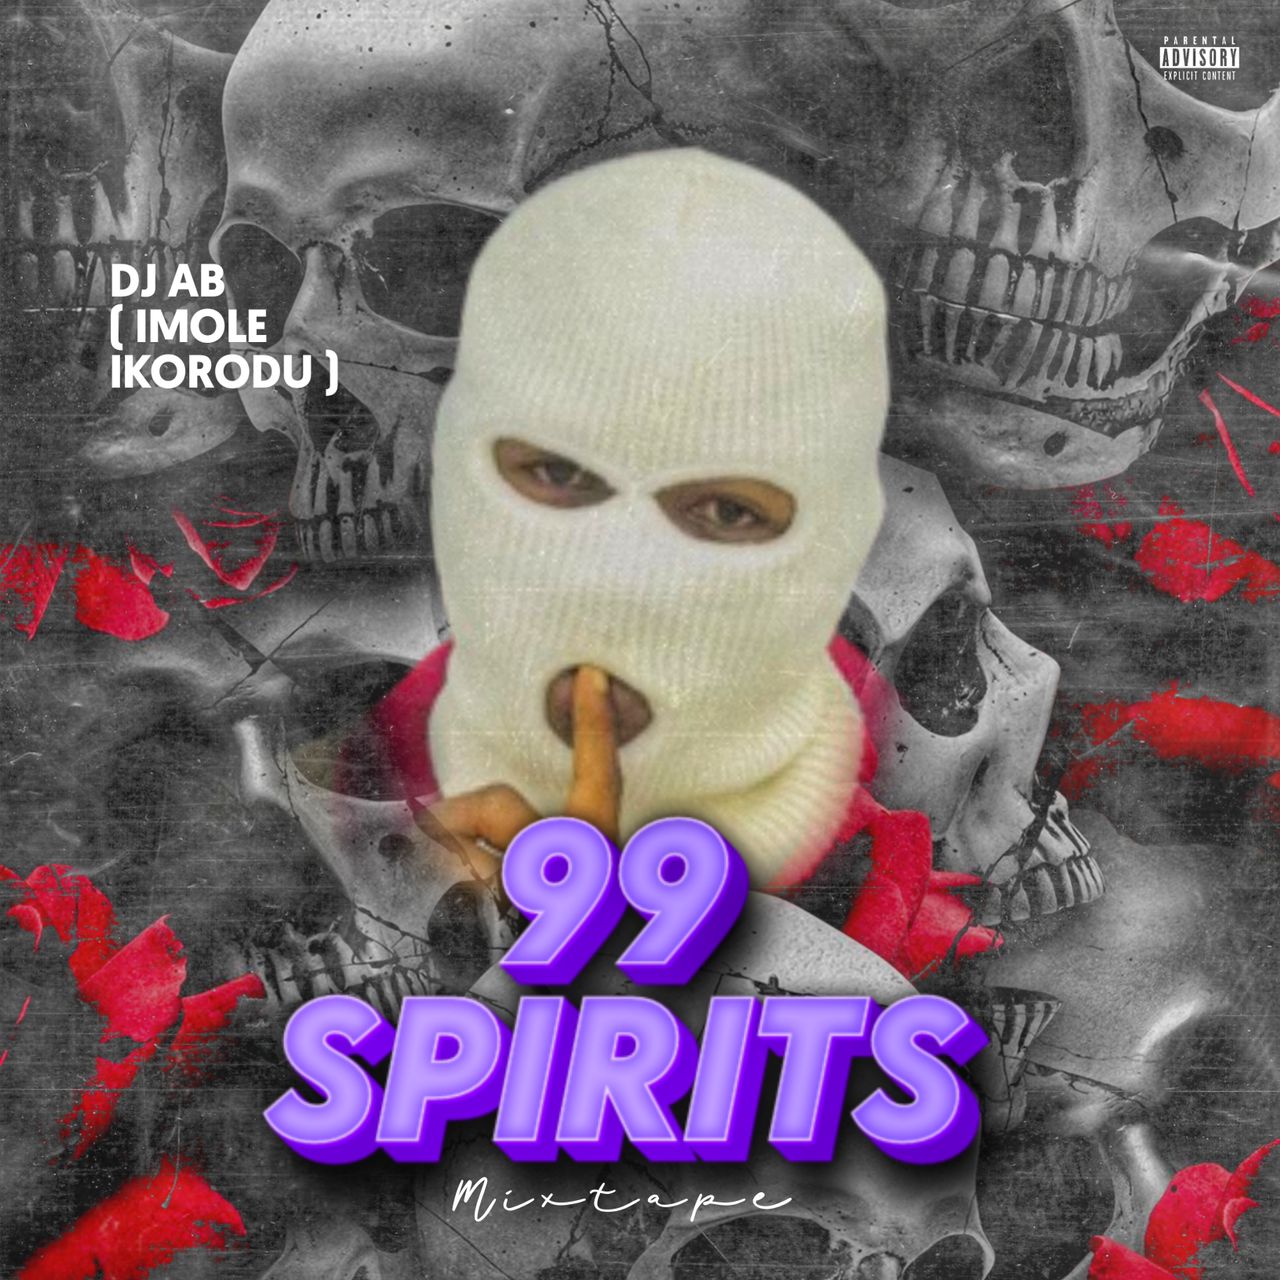 DJ AB Imole Ikorodu 99 Spirits Mixtape